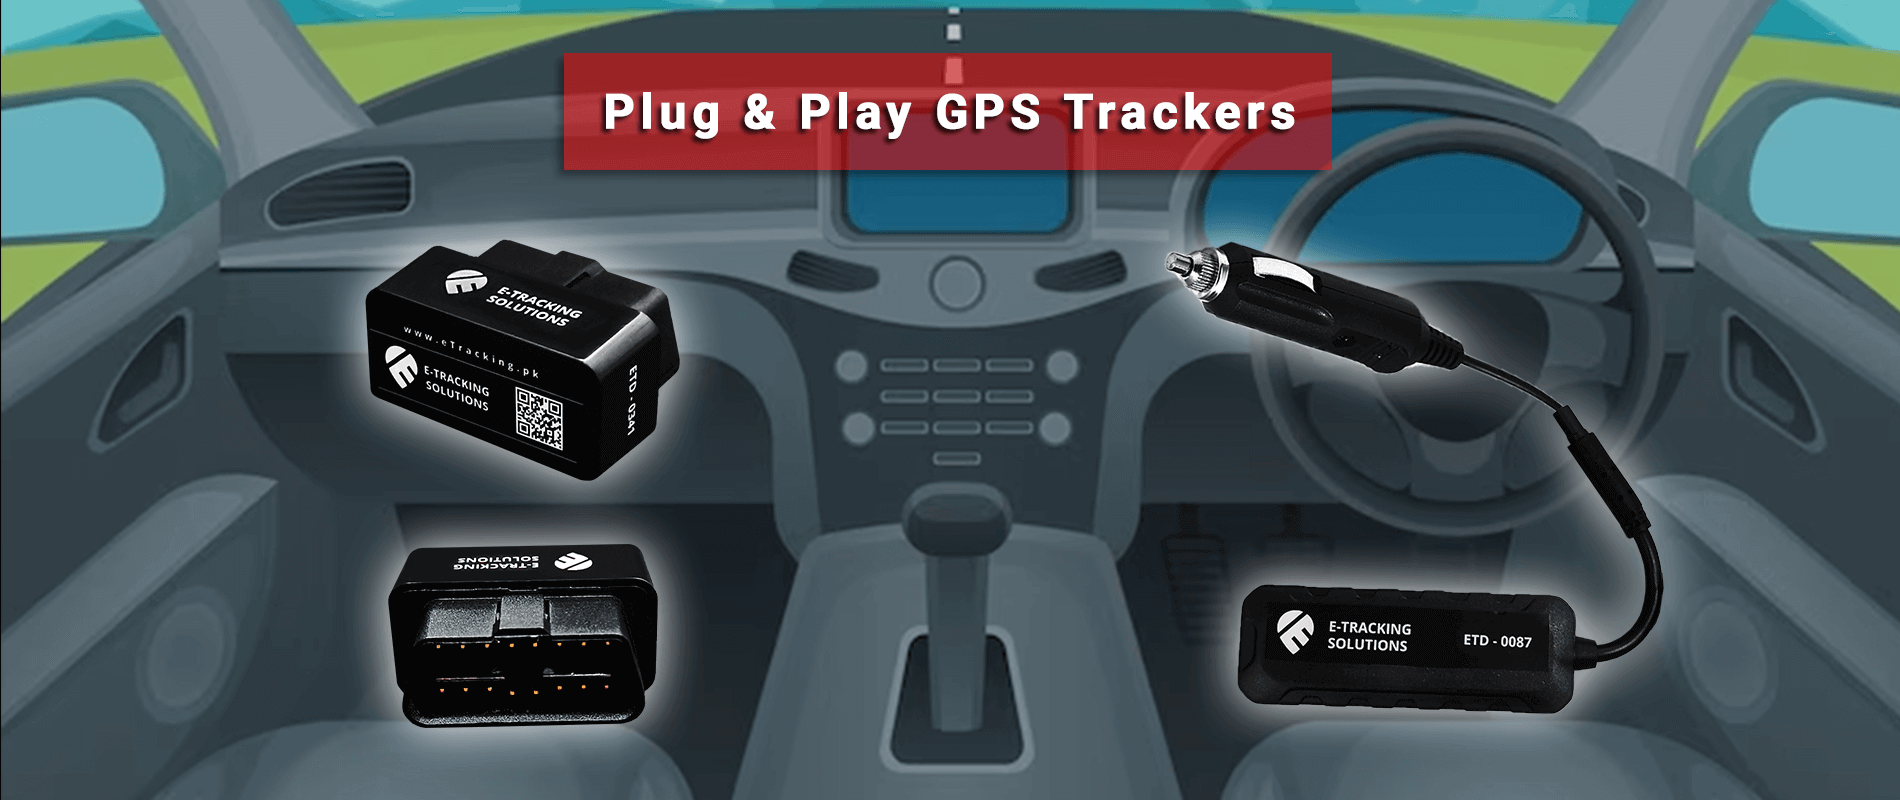 Plug & Play GPS Trackers